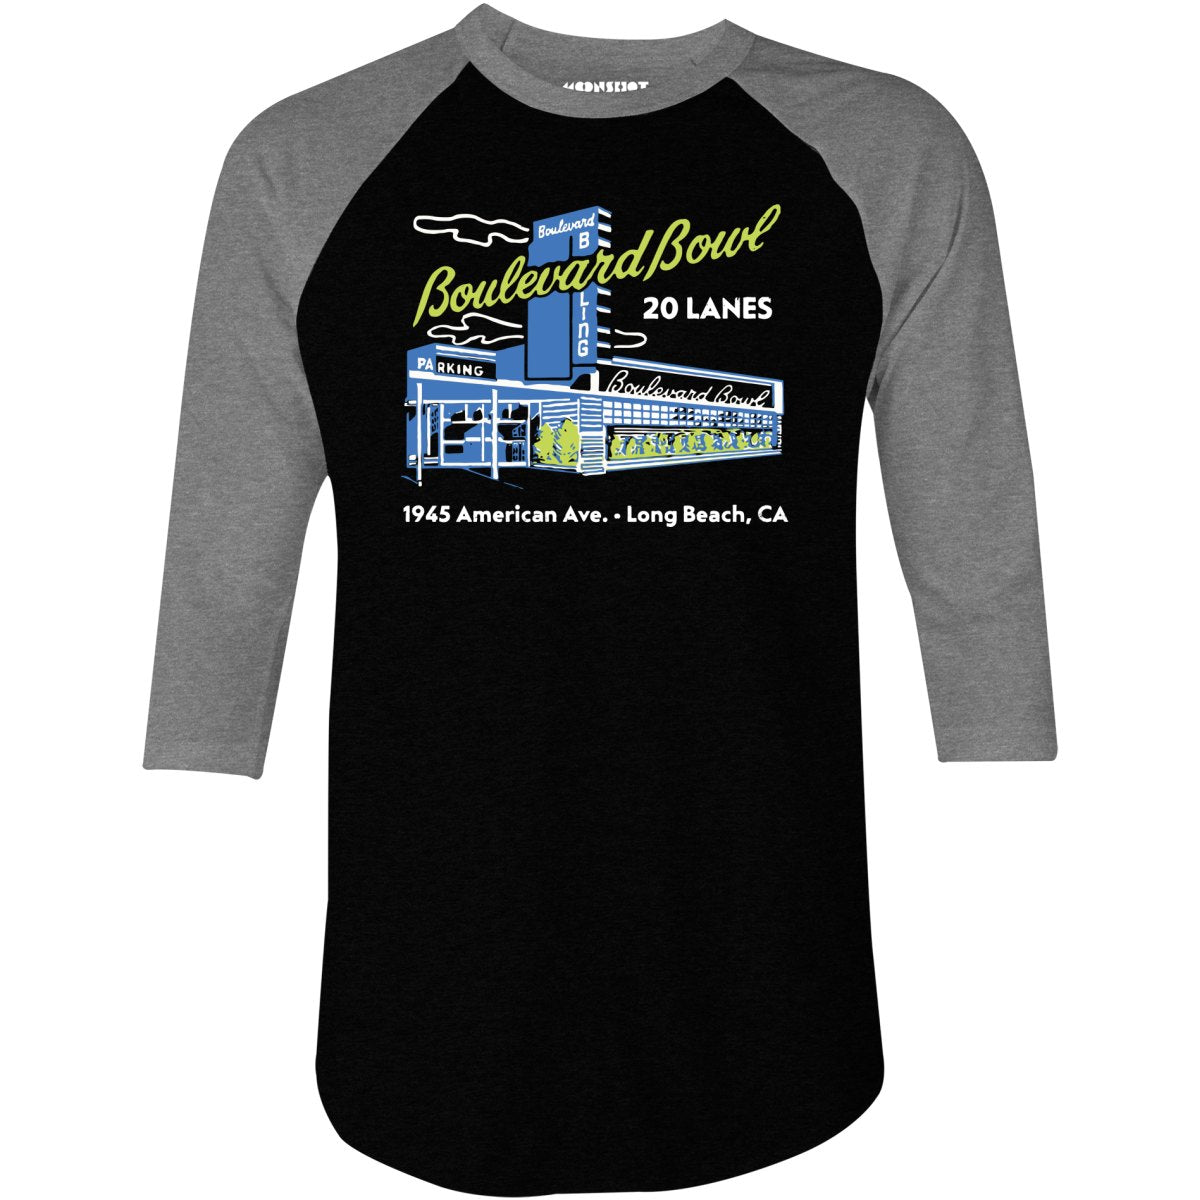 Boulevard Bowl - Long Beach, CA - Vintage Bowling Alley - 3/4 Sleeve Raglan T-Shirt